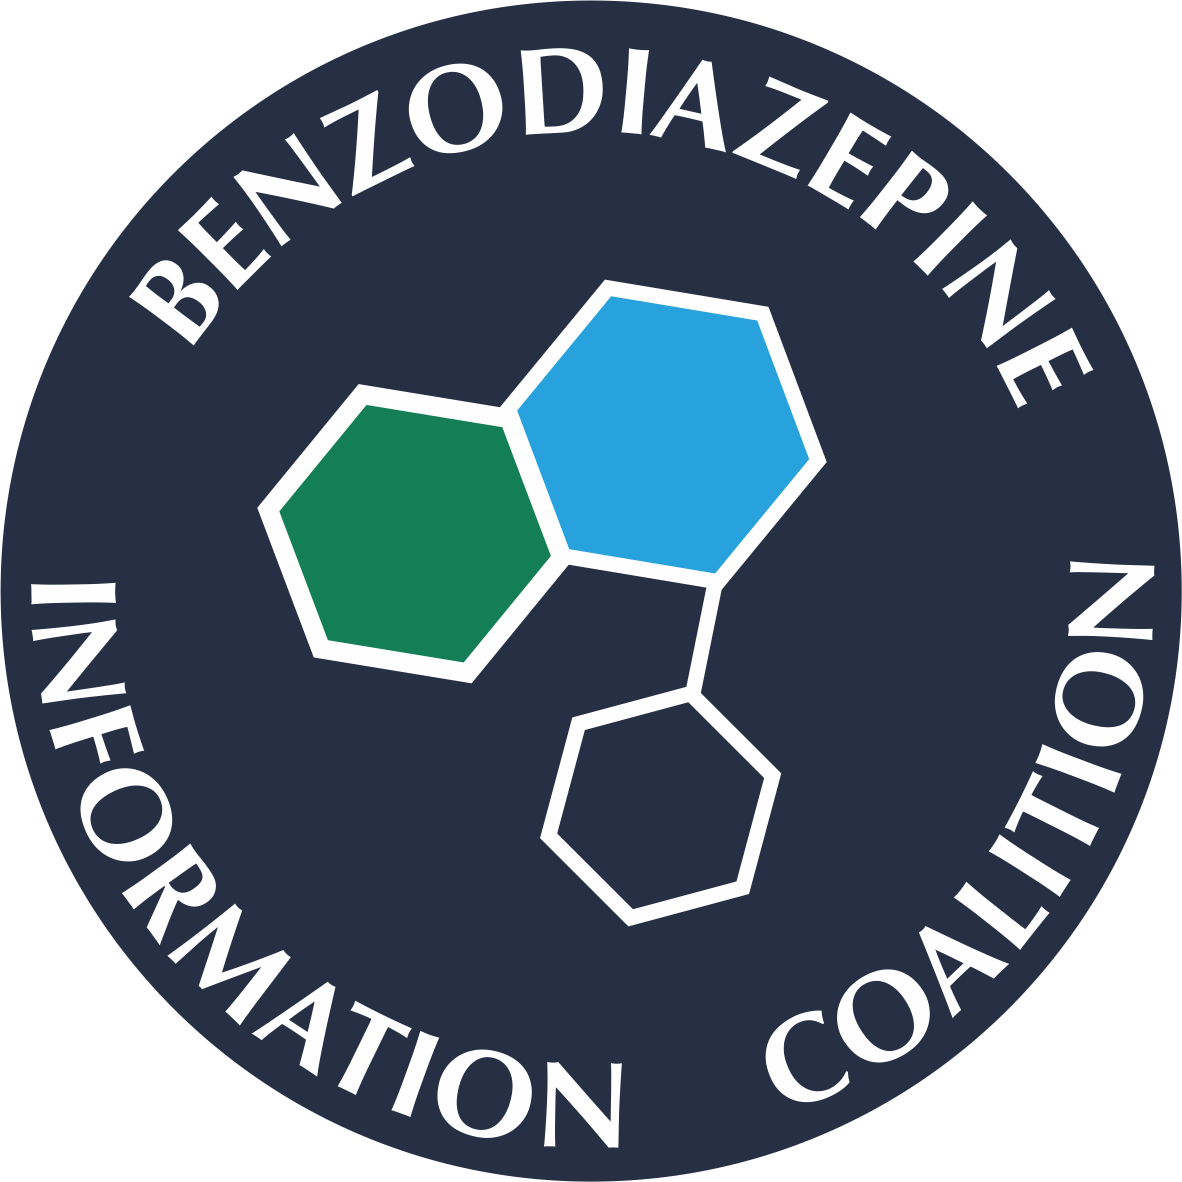 Benzodiazepine Information Coalition logo